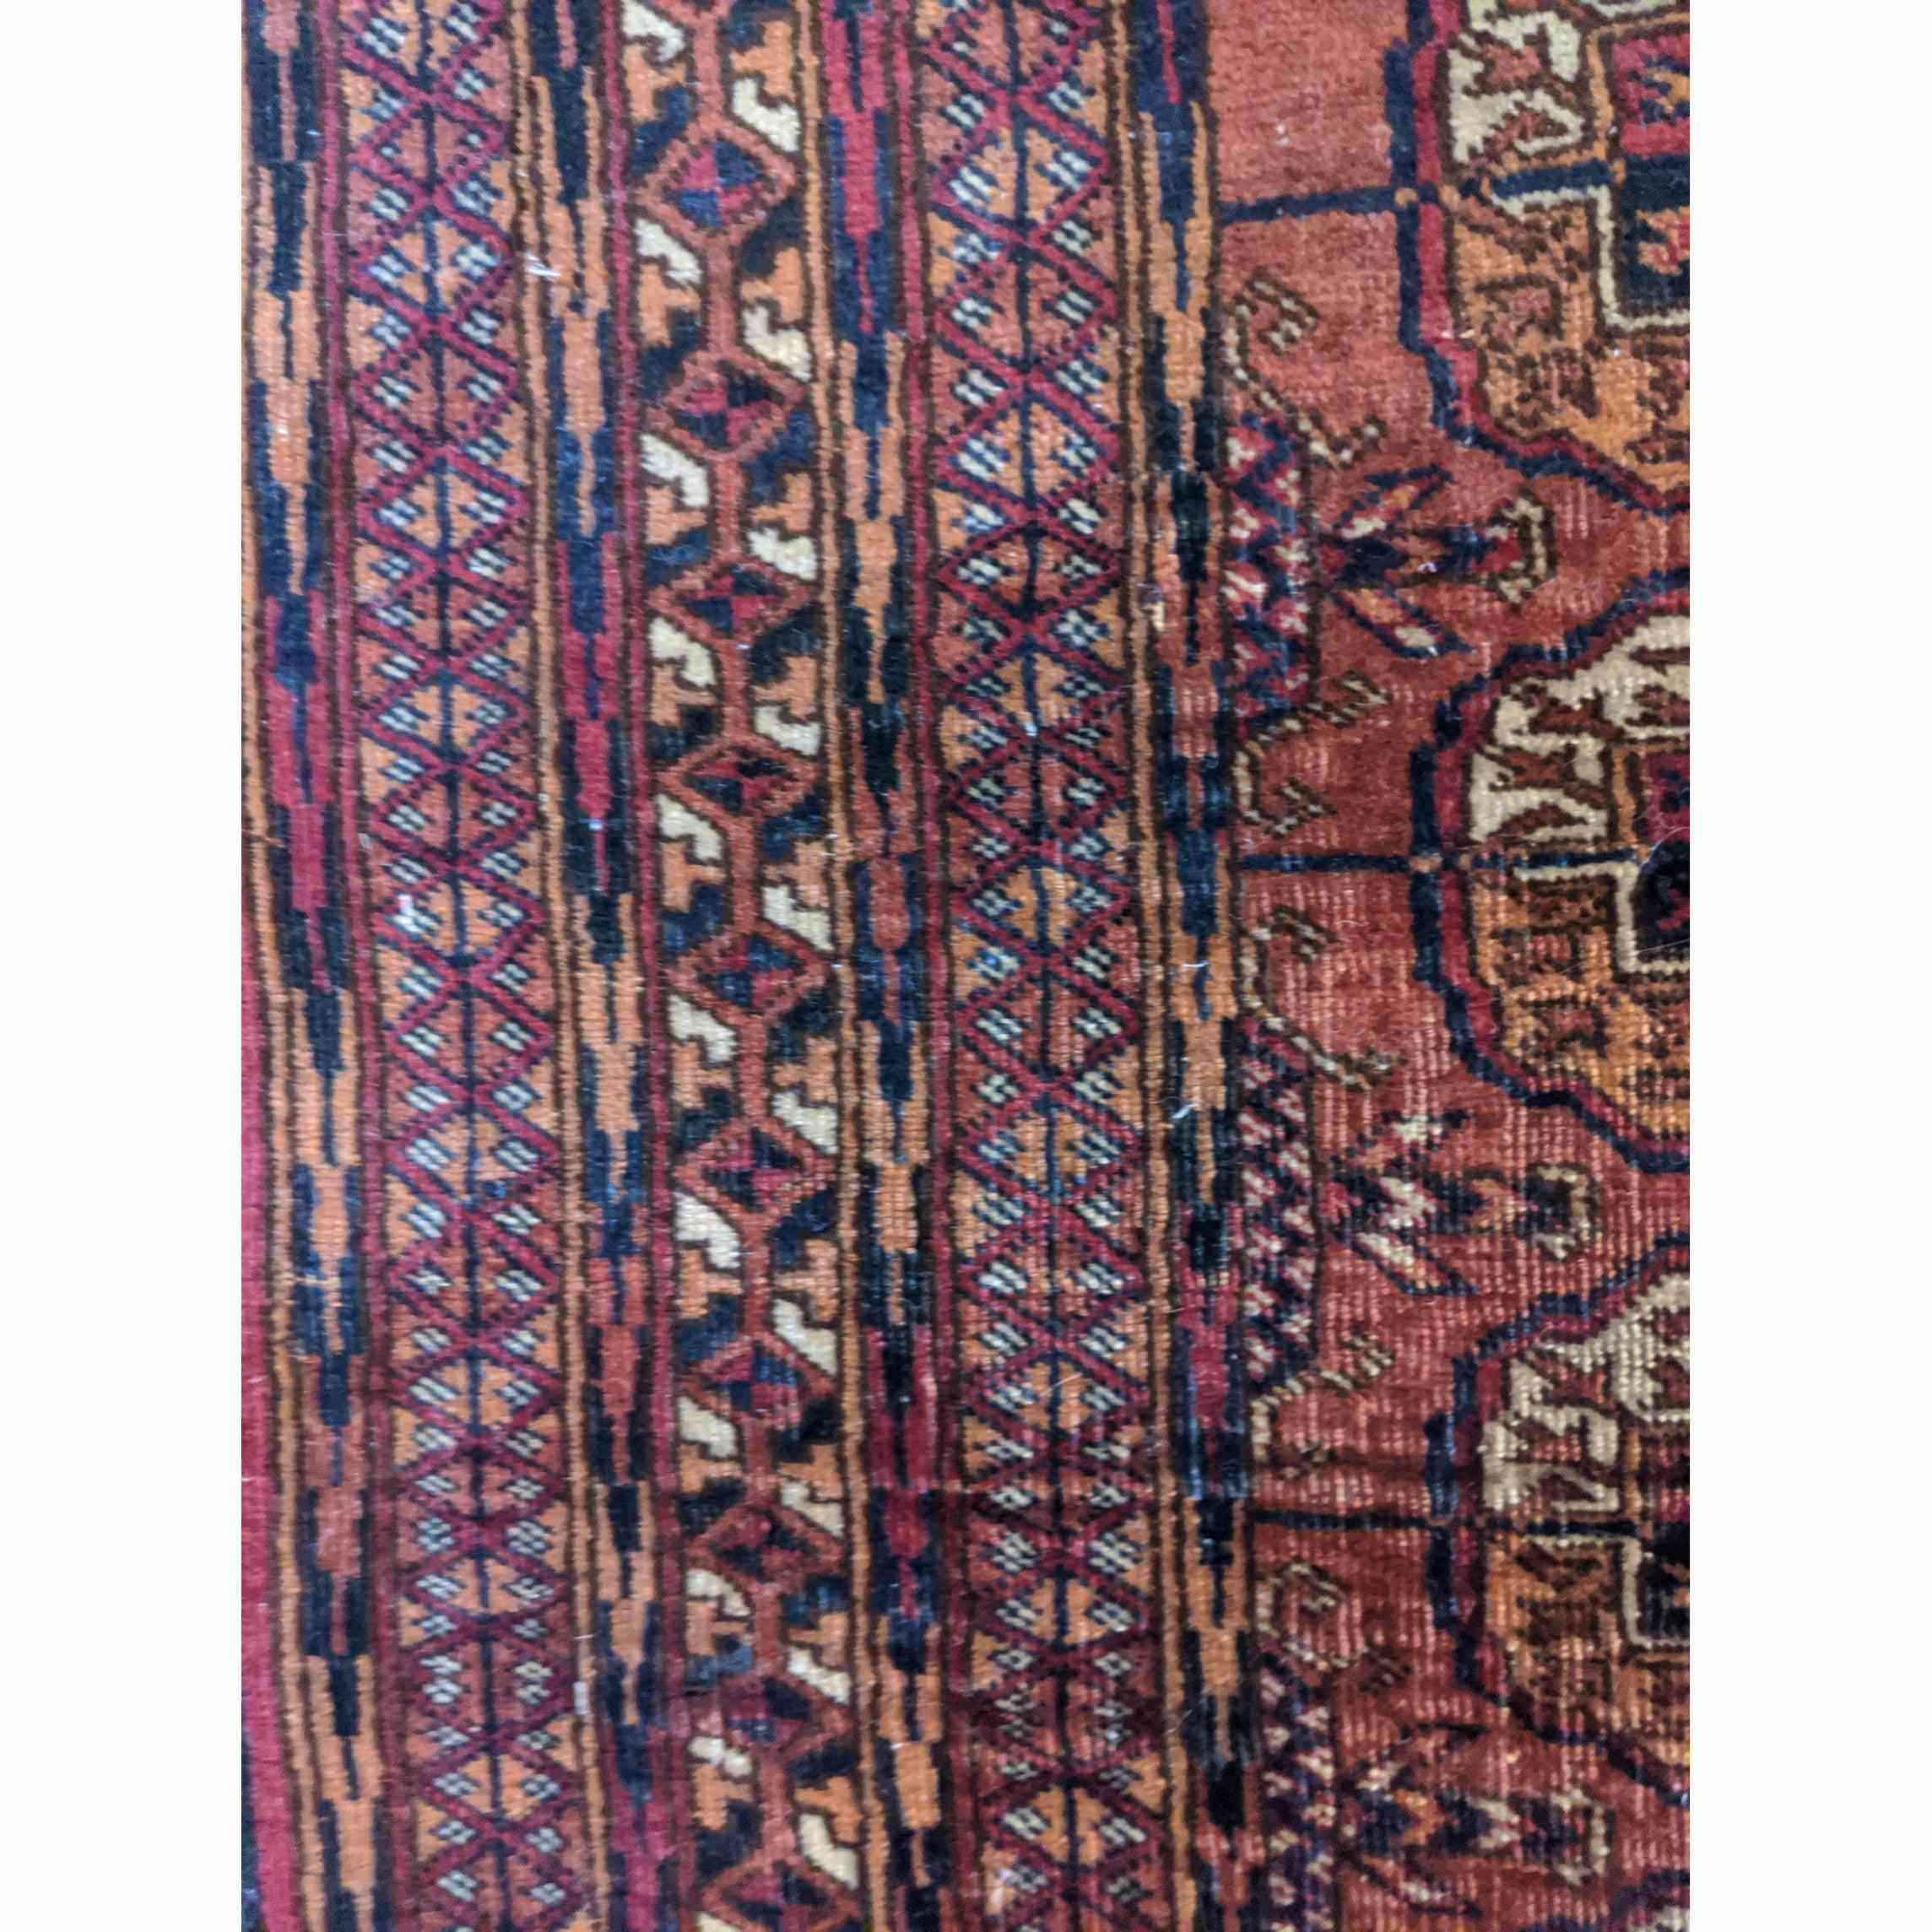 113 x 82 cm Old Turkomen Tribal Red Rug - Rugmaster